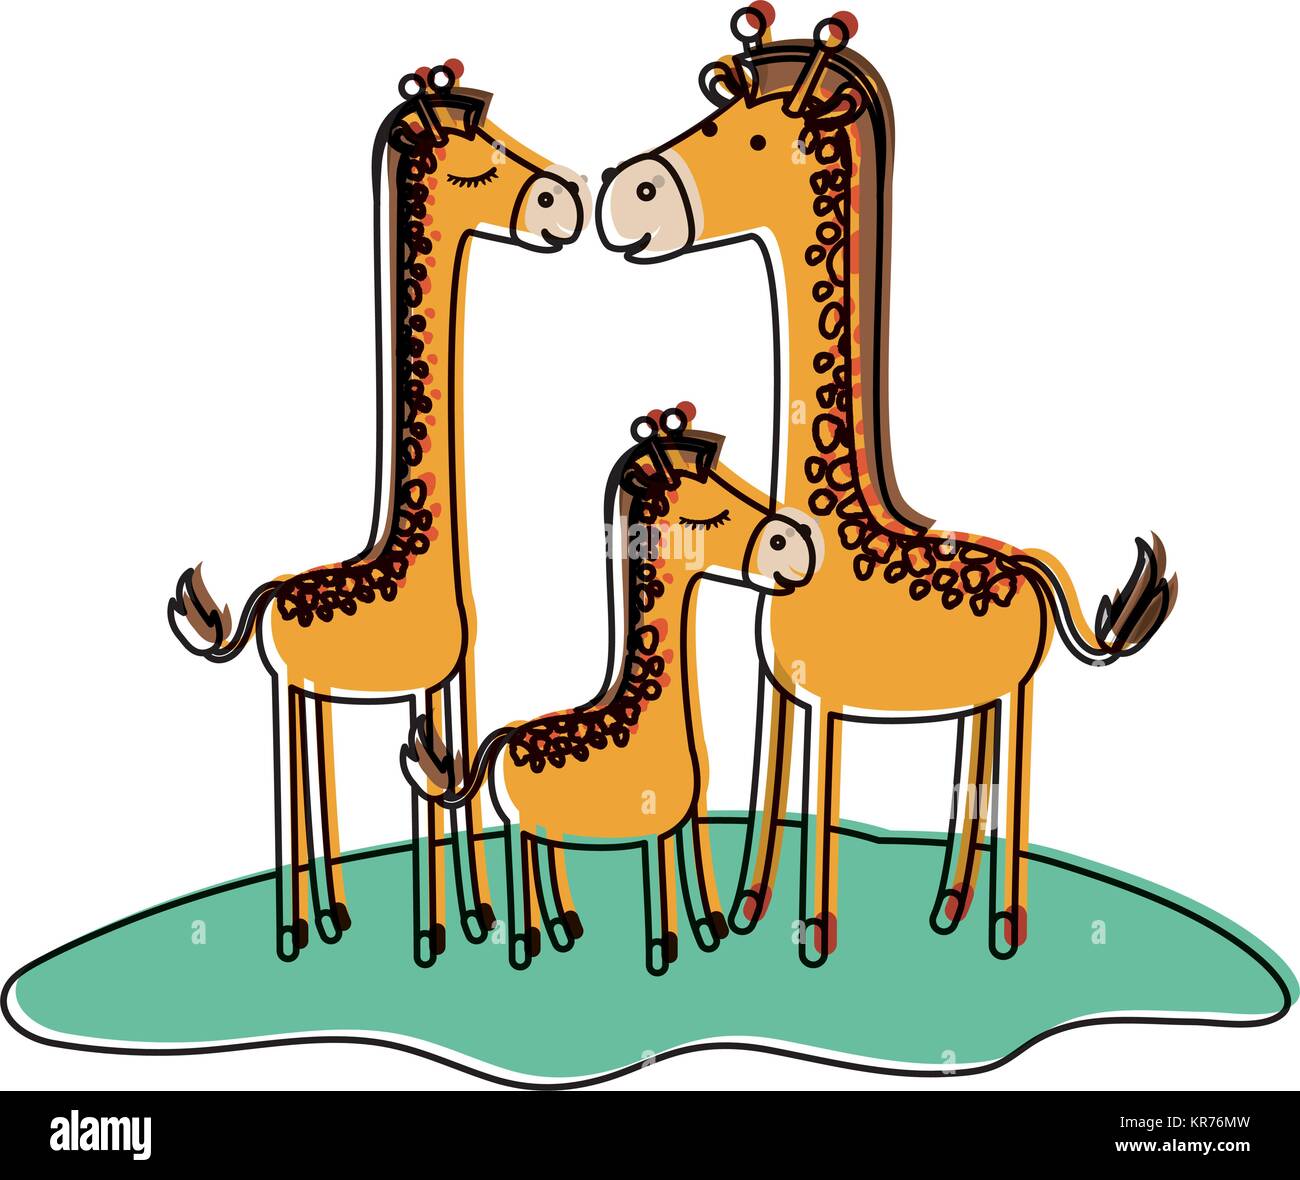 cartoon giraffes couple with calf over grass in watercolor silhouette Stock Vector